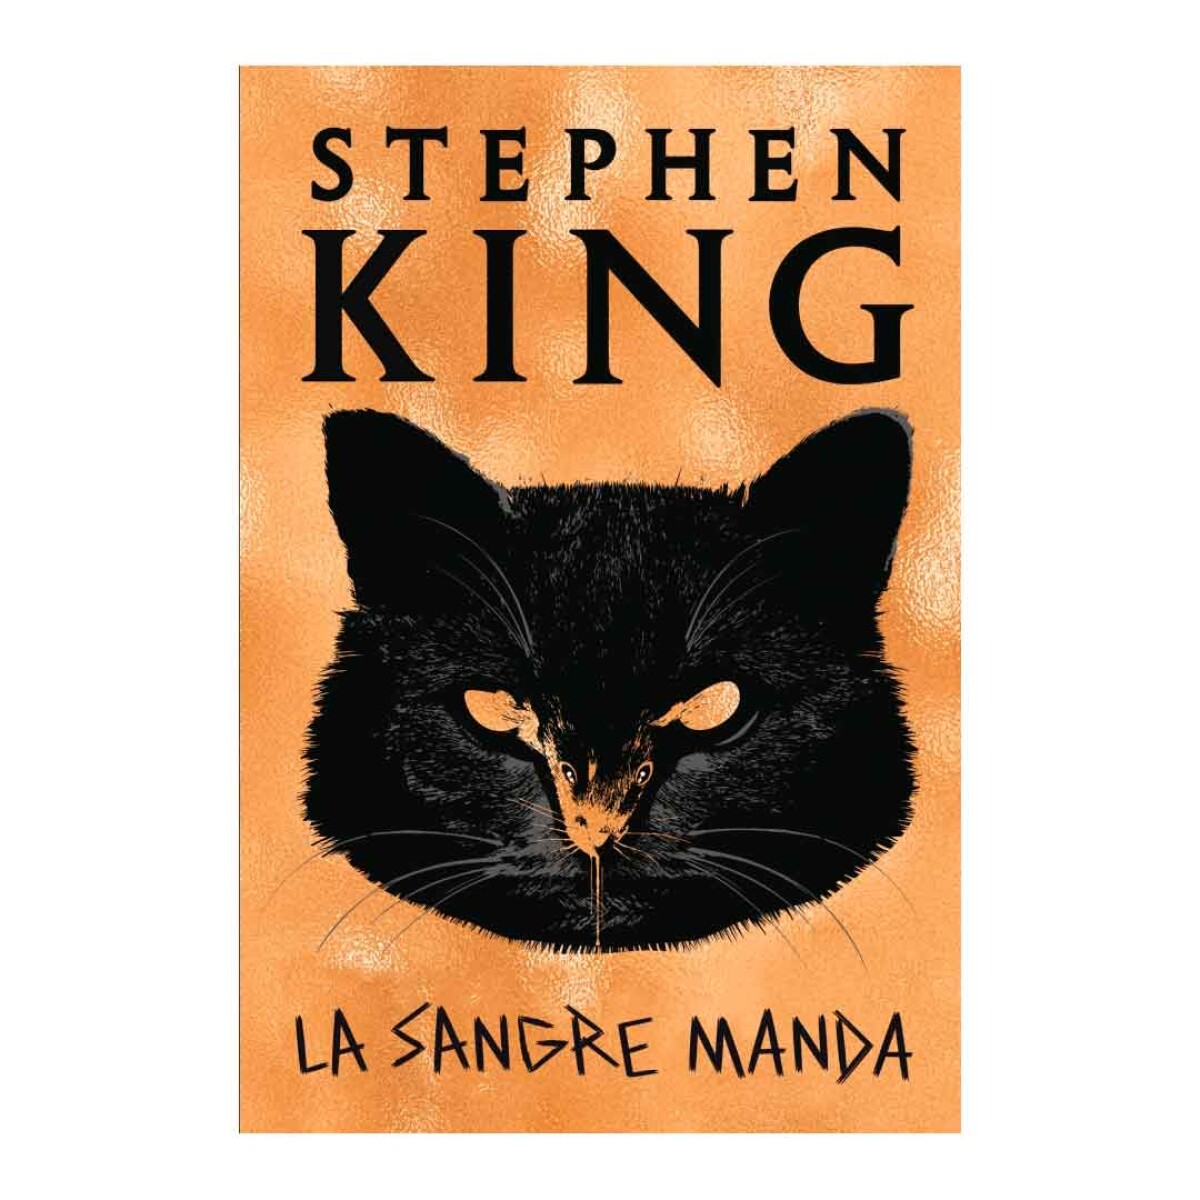 Libro La sangre manda by Stephen King - 001 